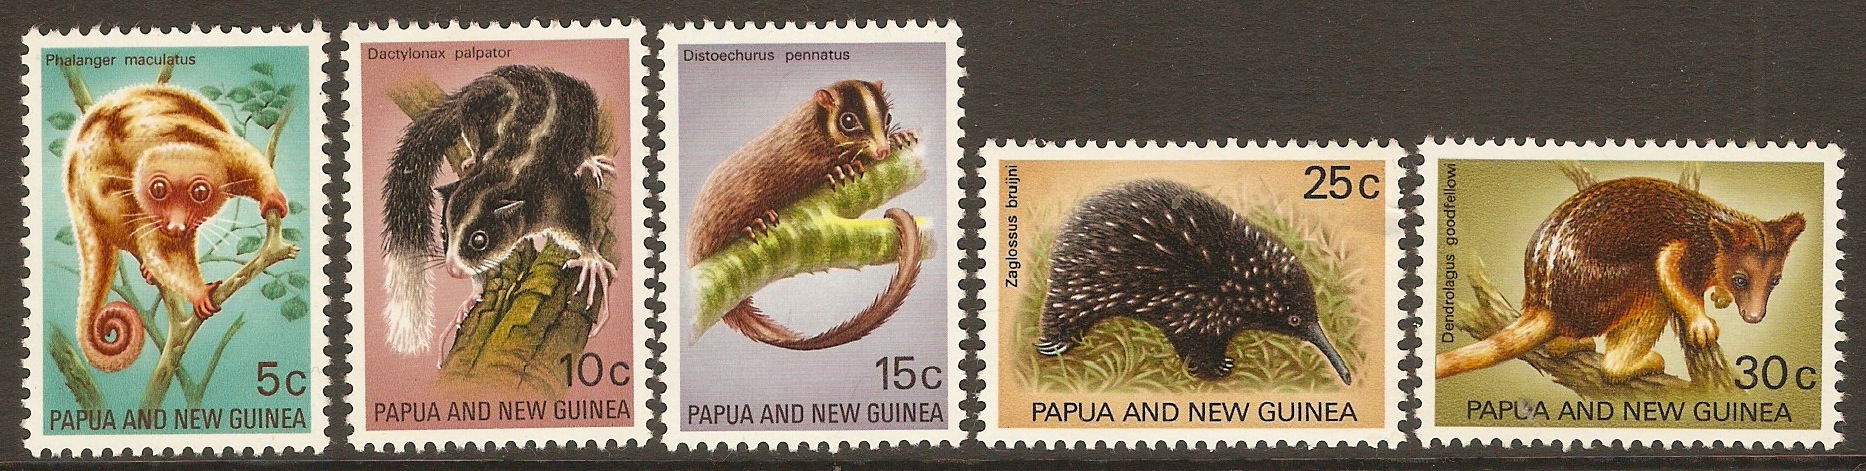 Papua New Guinea 1971 Fauna Conservation set. SG195-SG199.